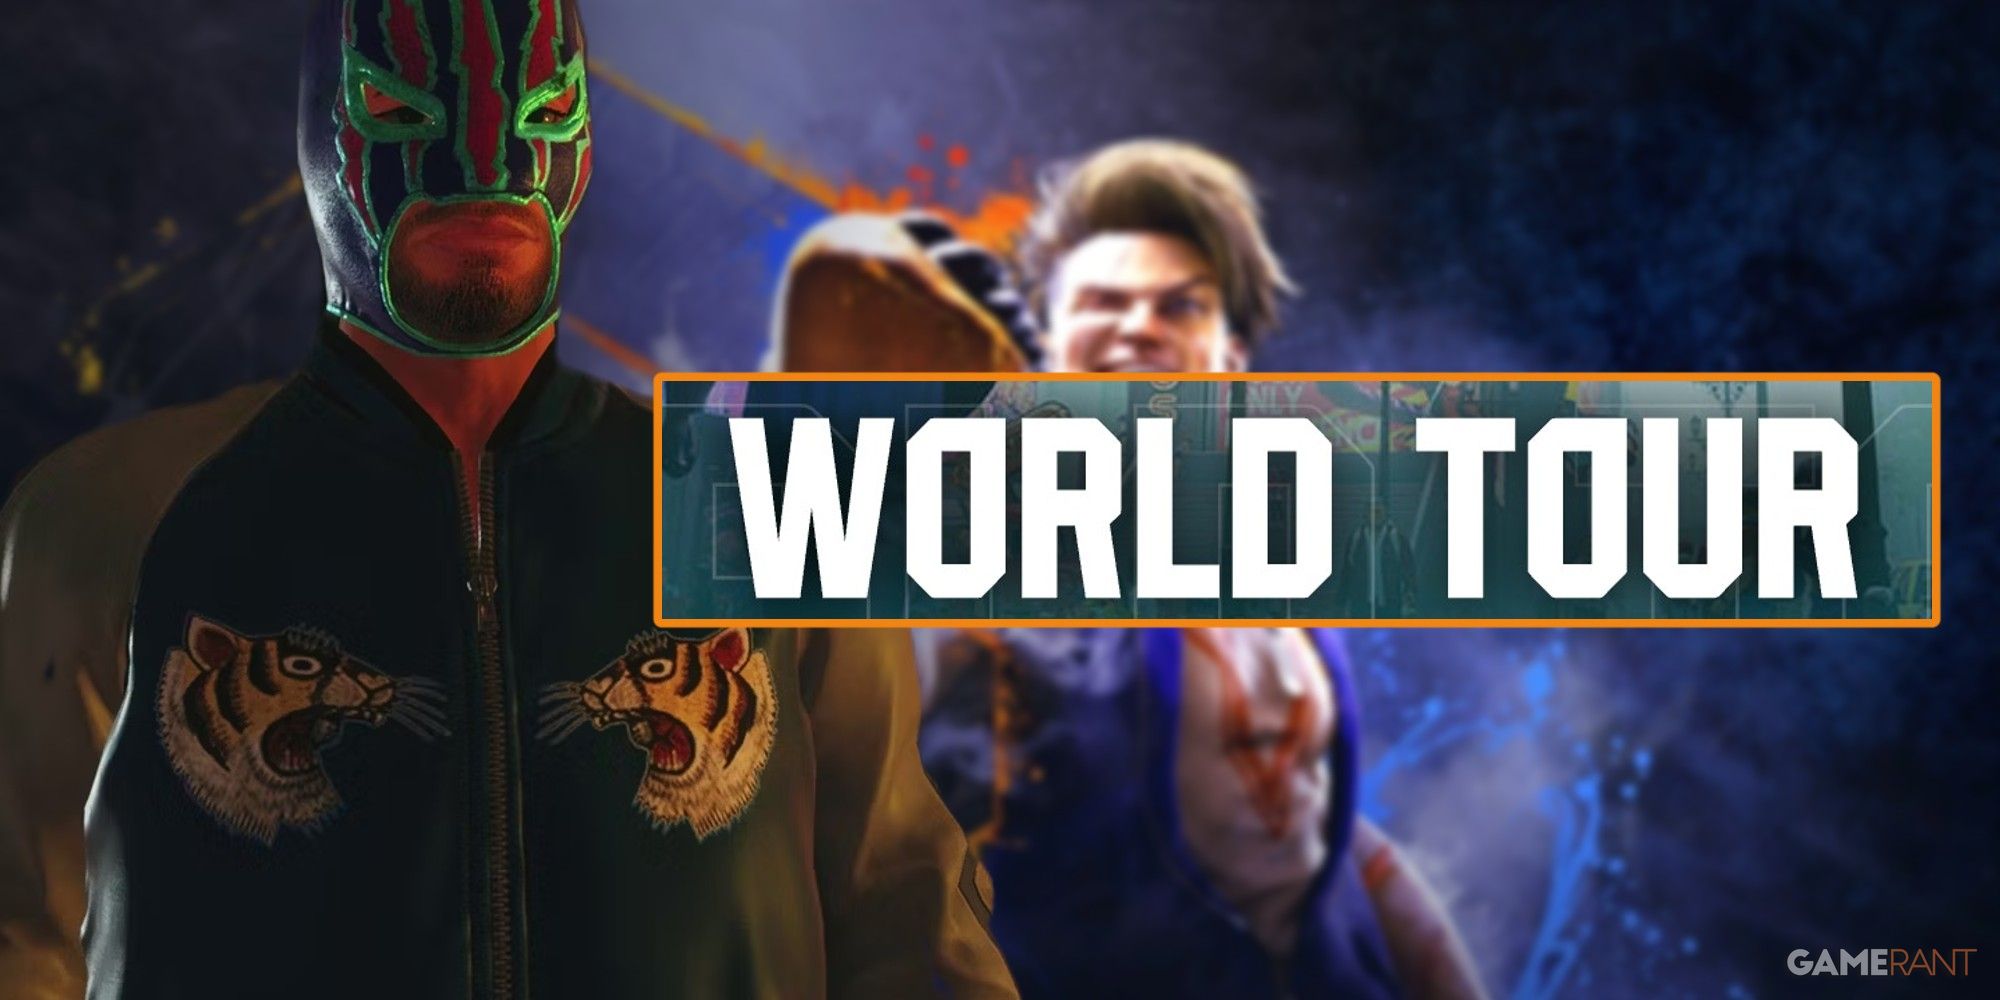 Street Fighter 6 World Tour Tips for Beginners